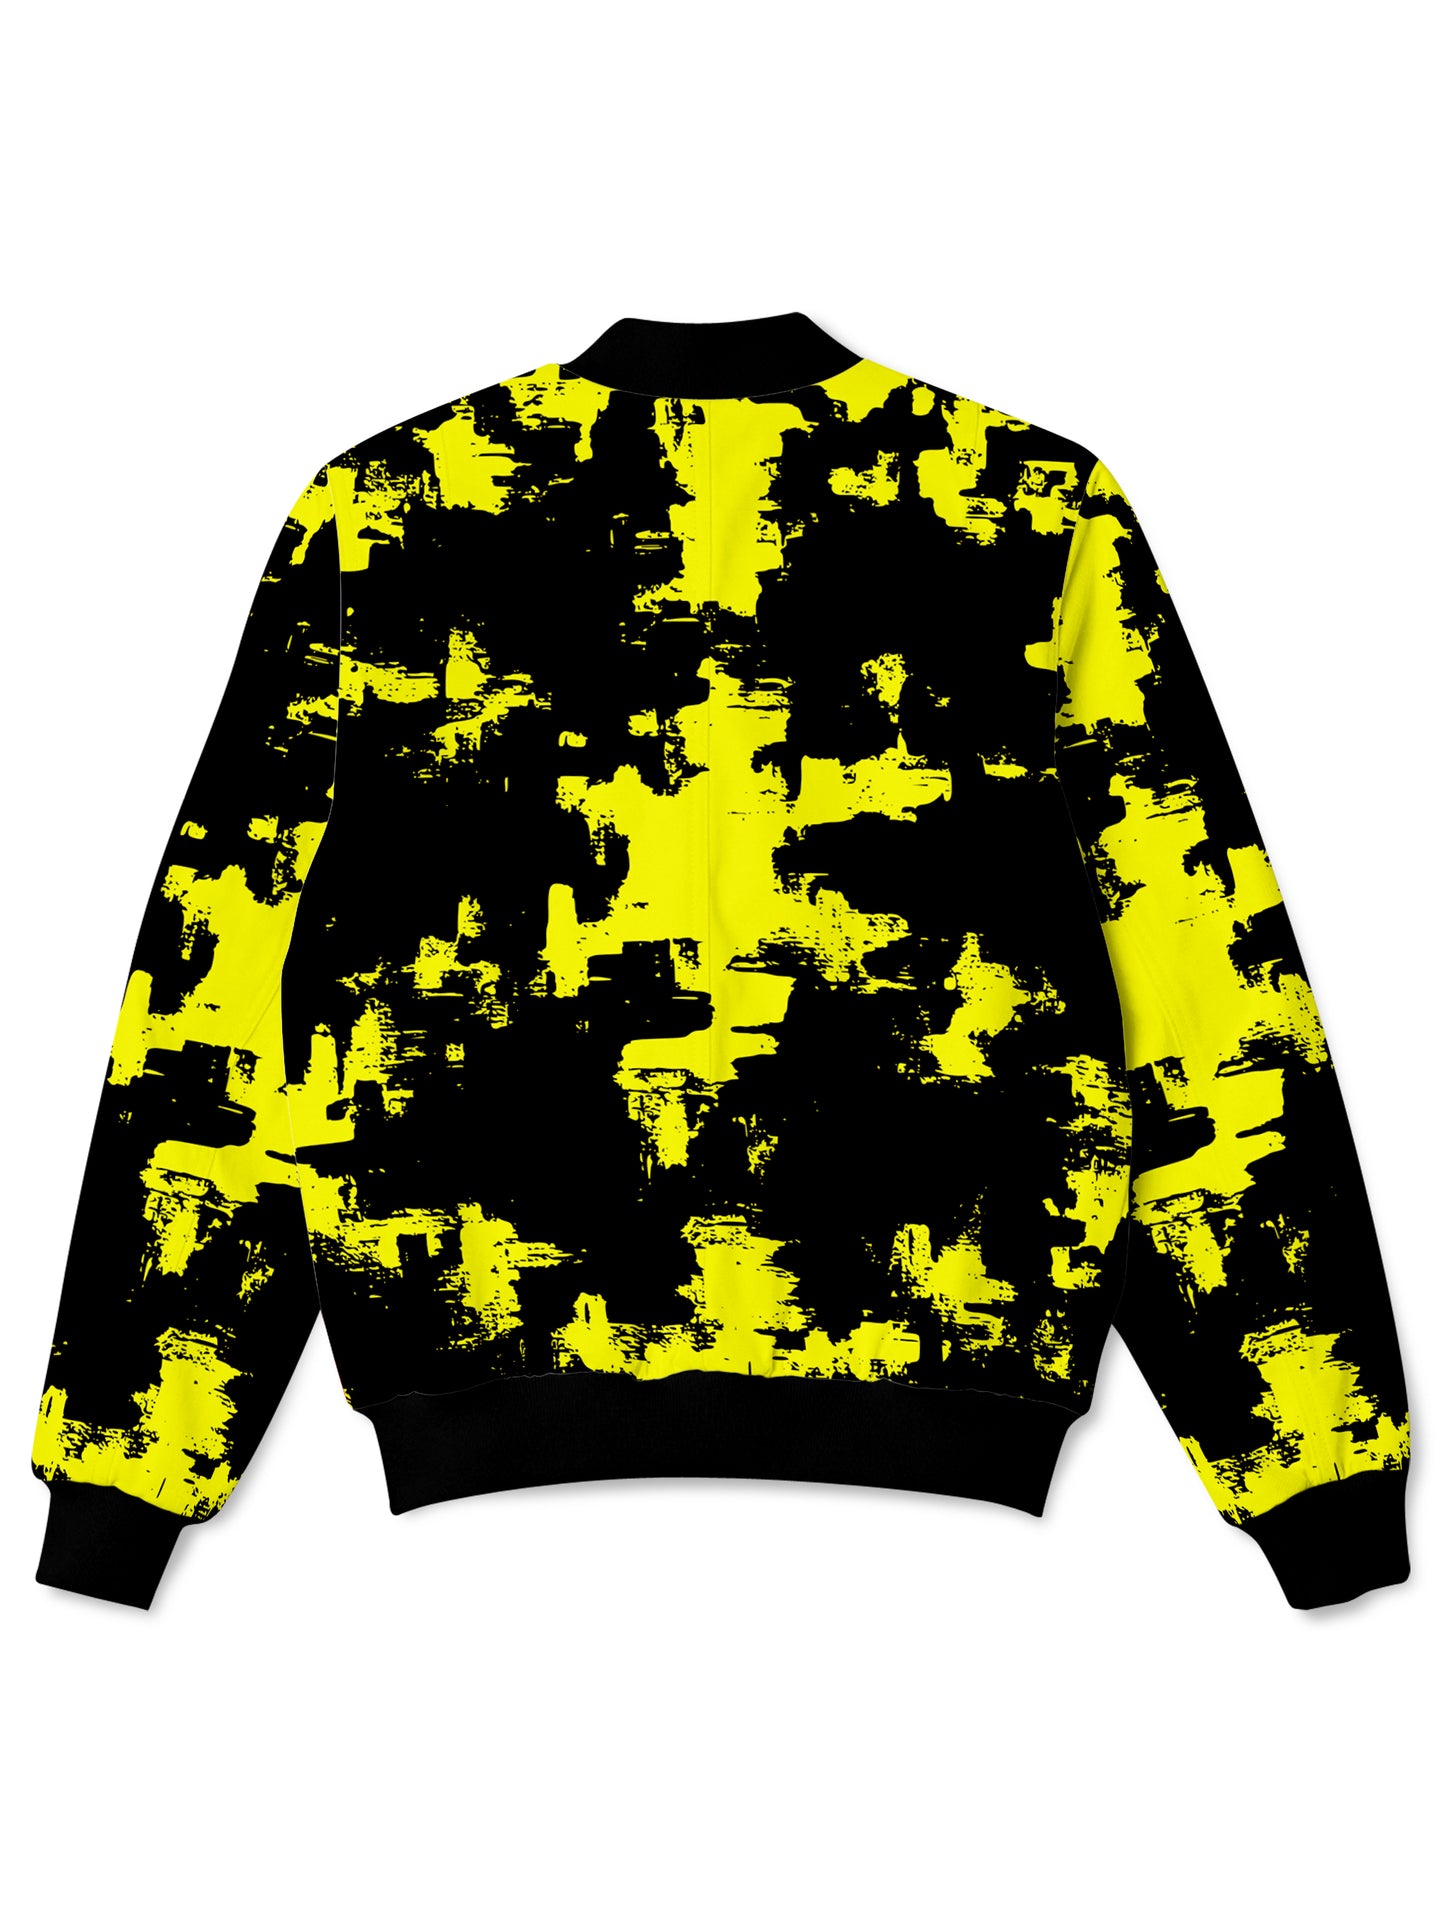 Black and Yellow Abstract Bomber Jacket, Big Tex Funkadelic, | iEDM